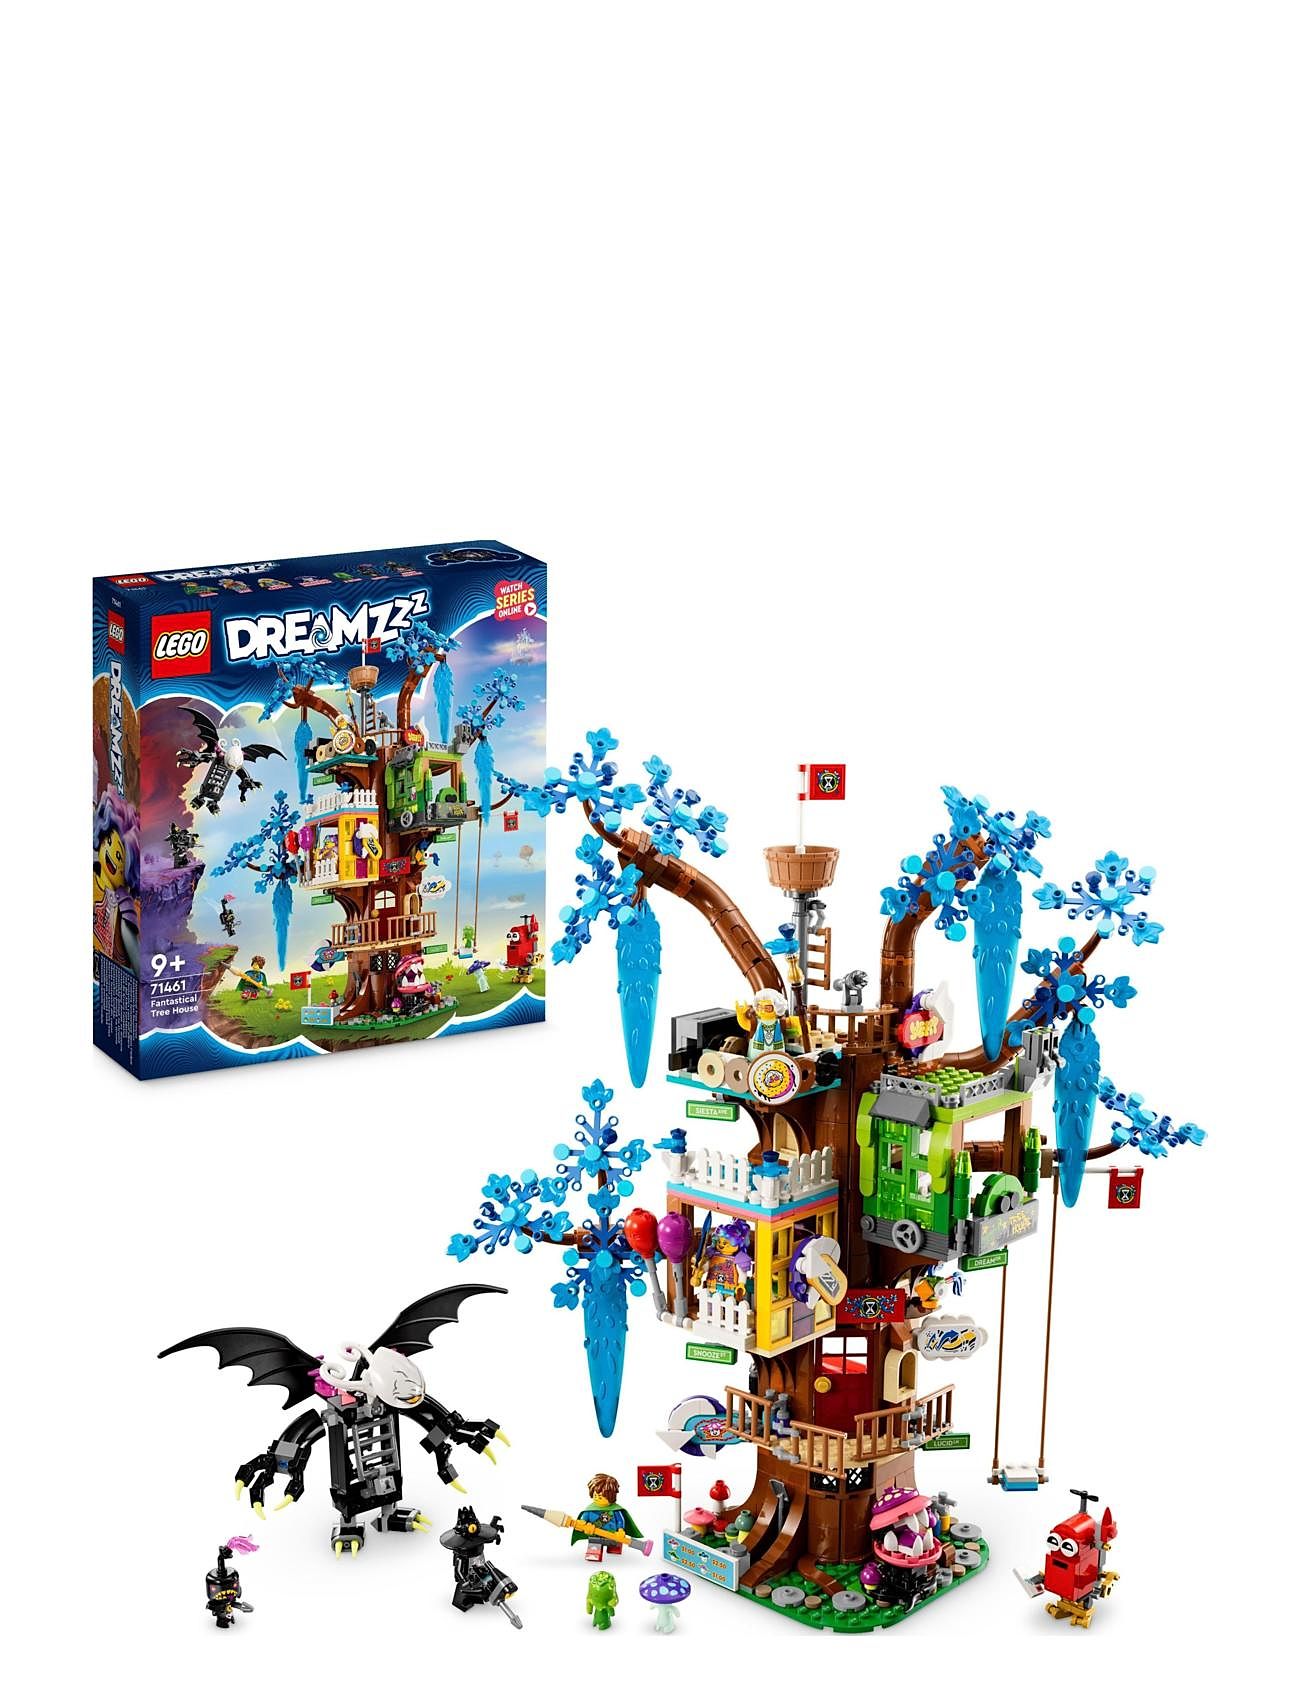 Fantastical Tree House Adventure Toy Set Toys Lego Toys Lego® Dreamzzz™ Multi/patterned LEGO